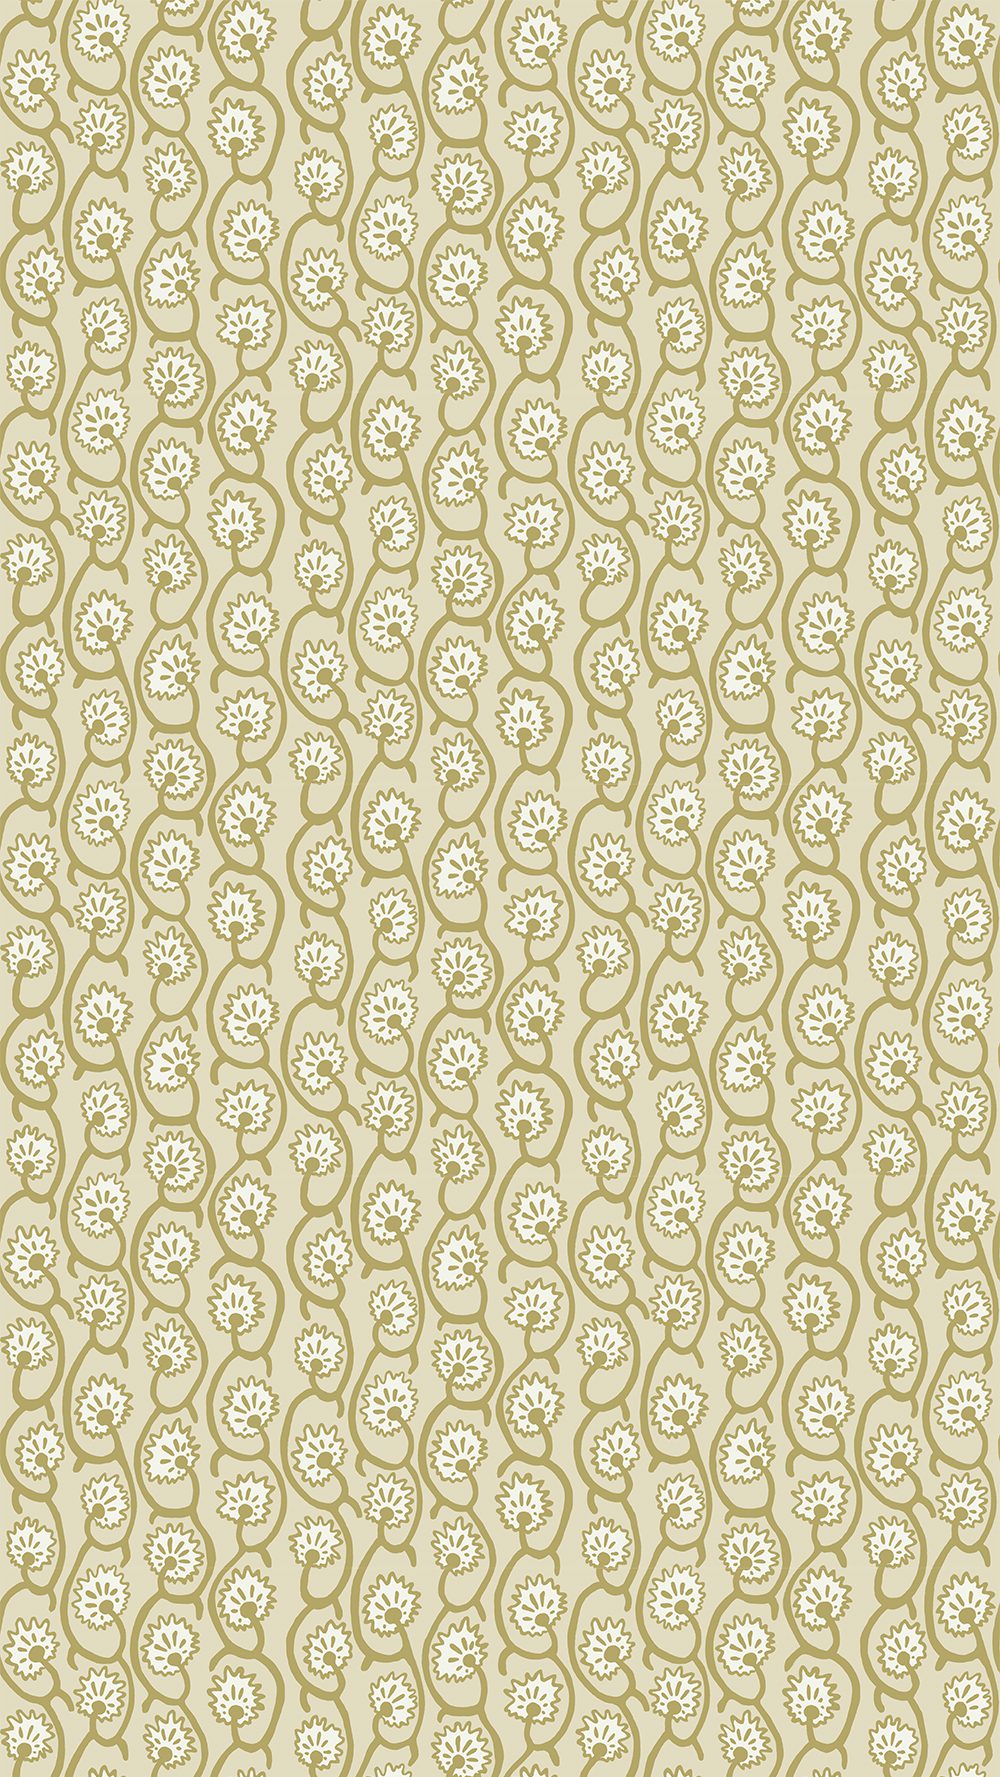 GER-026-021-043josephine-munsey-wallpaper-geranium-stripe-meadow-maitland-green-skirting-white-floral-botanical-stripe-block-print-style-wallpaper